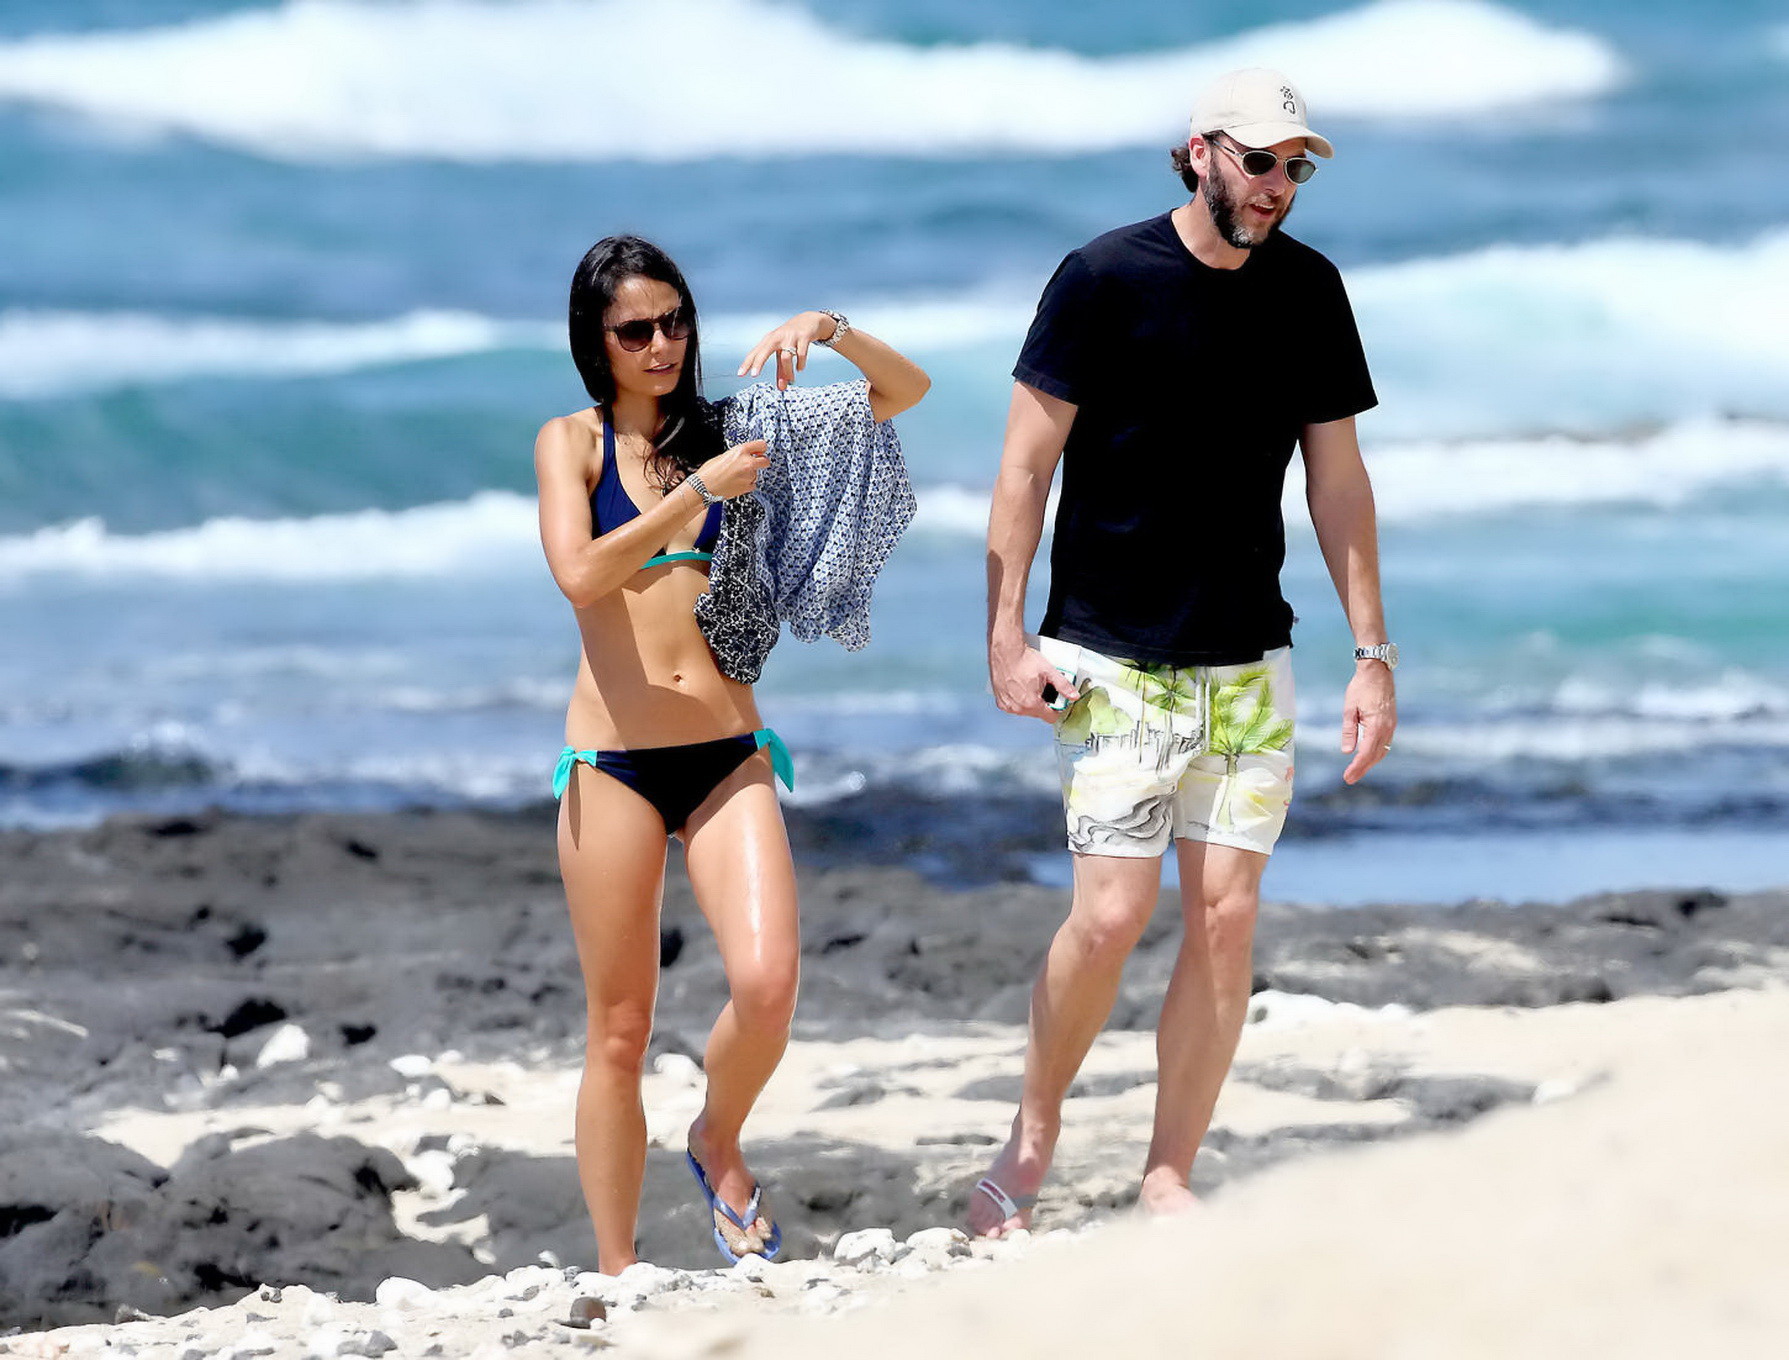 Jordana brewster est sexy dans un bikini bleu à la plage de hawaii
 #75187801